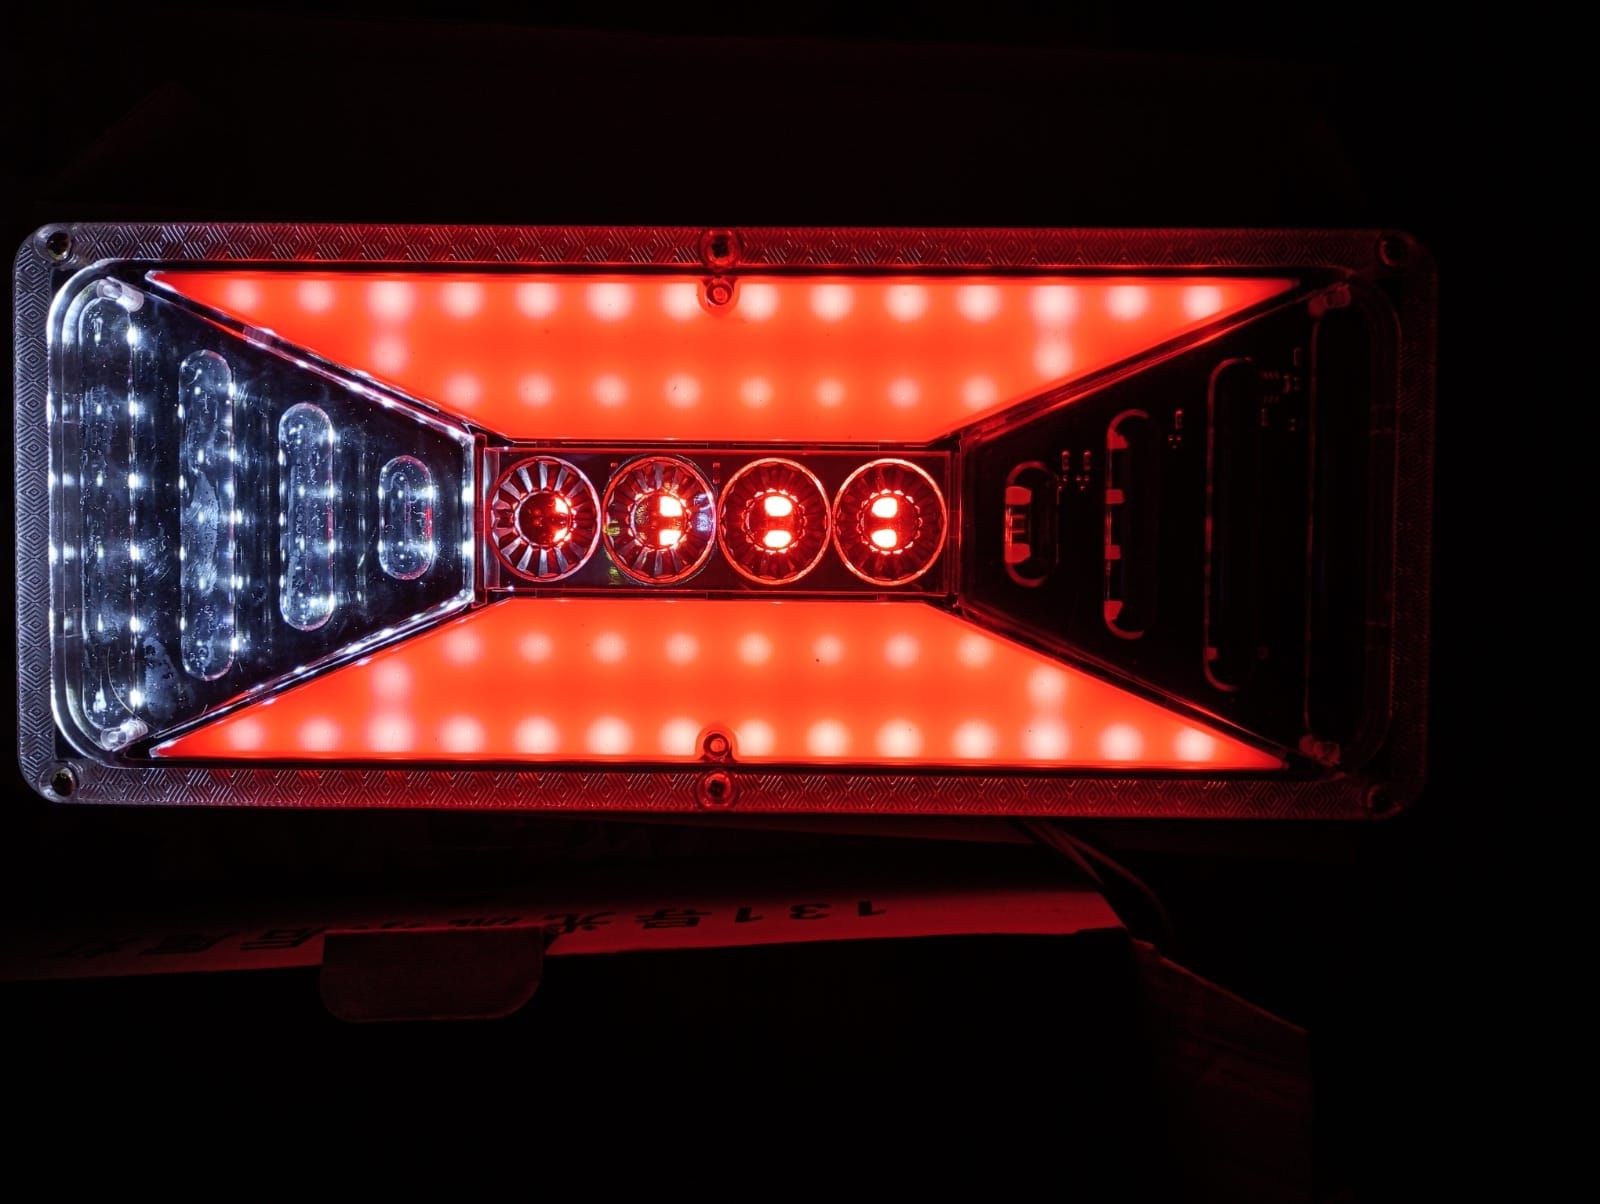 Set lampi LED 12V- 24V cu 4 functii
Dimensiunii 33X14X2cm